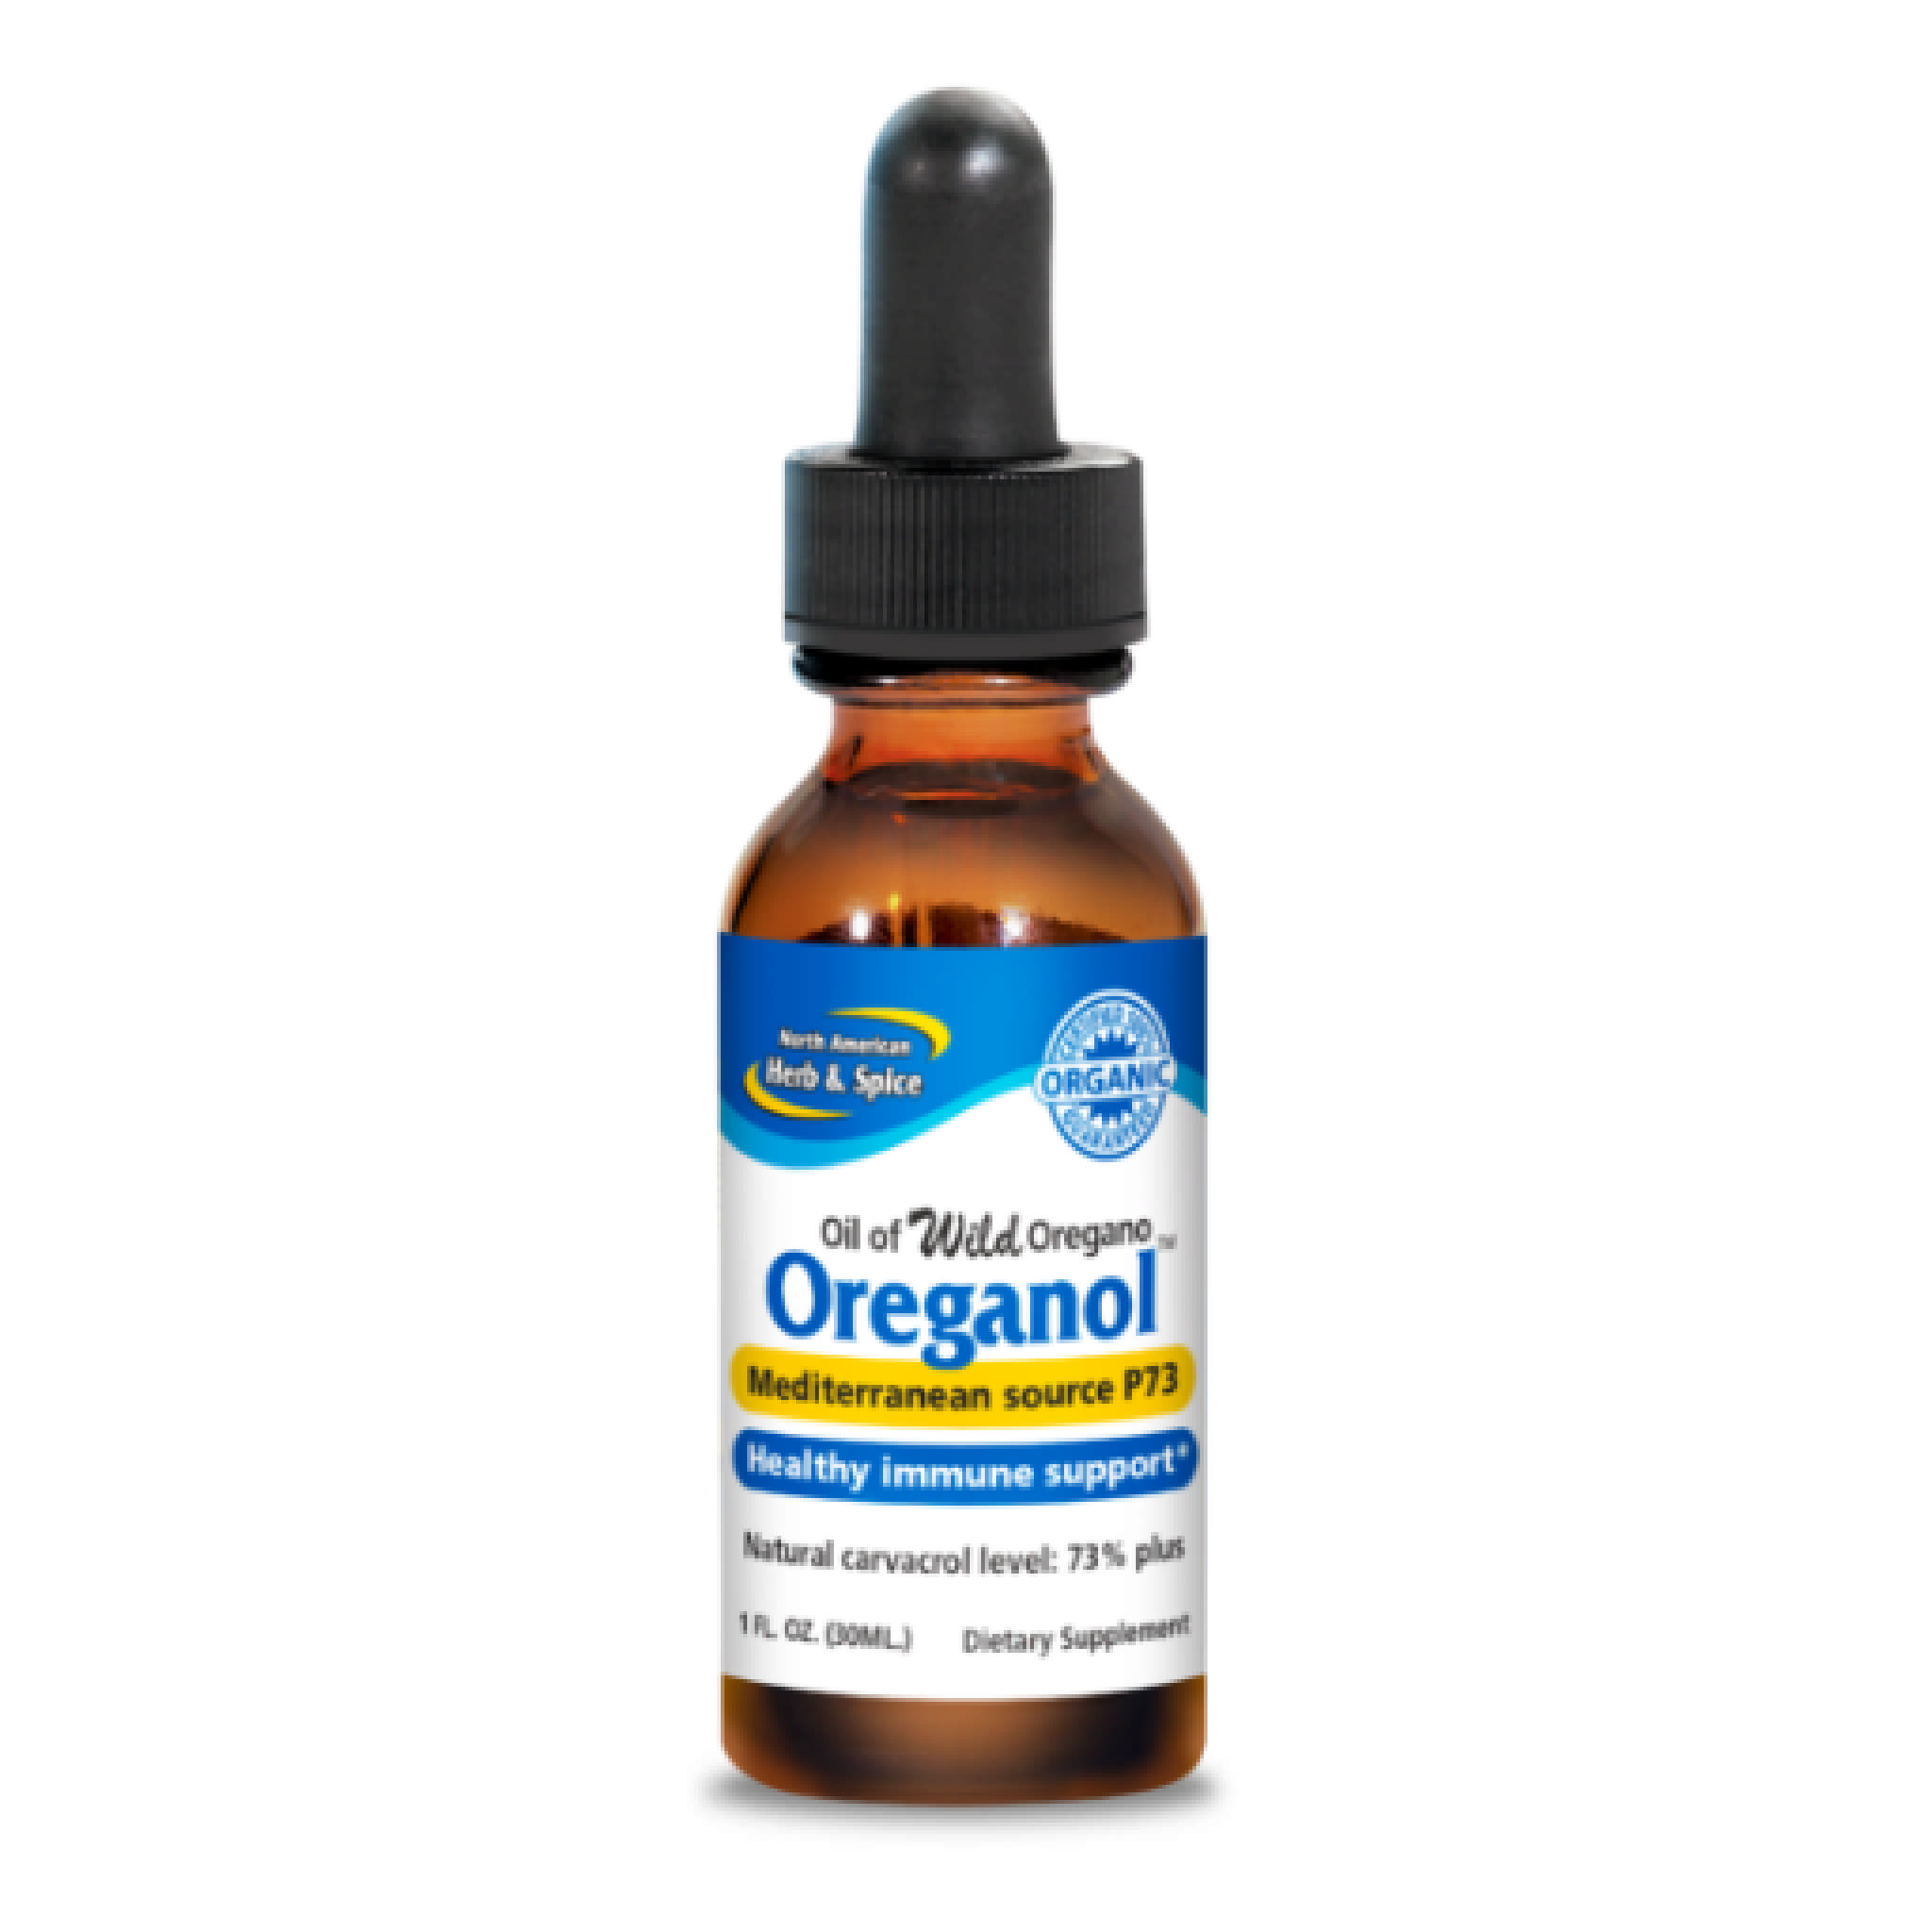 North American Herb - Oreganol Oil